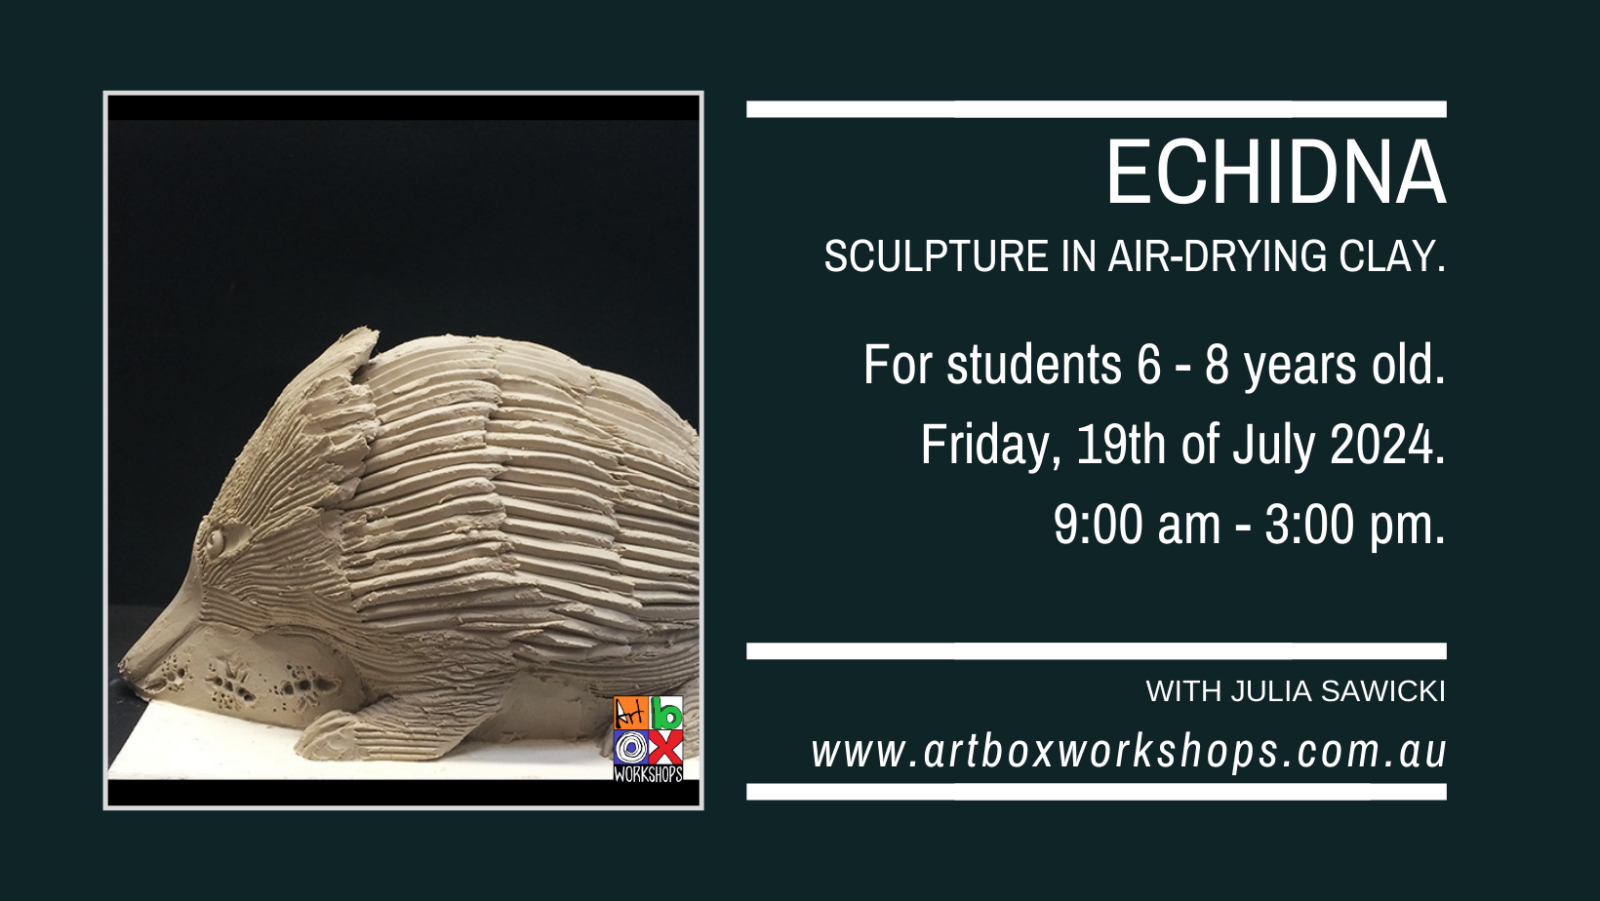 Echidna sculpture at Art Box Workshops